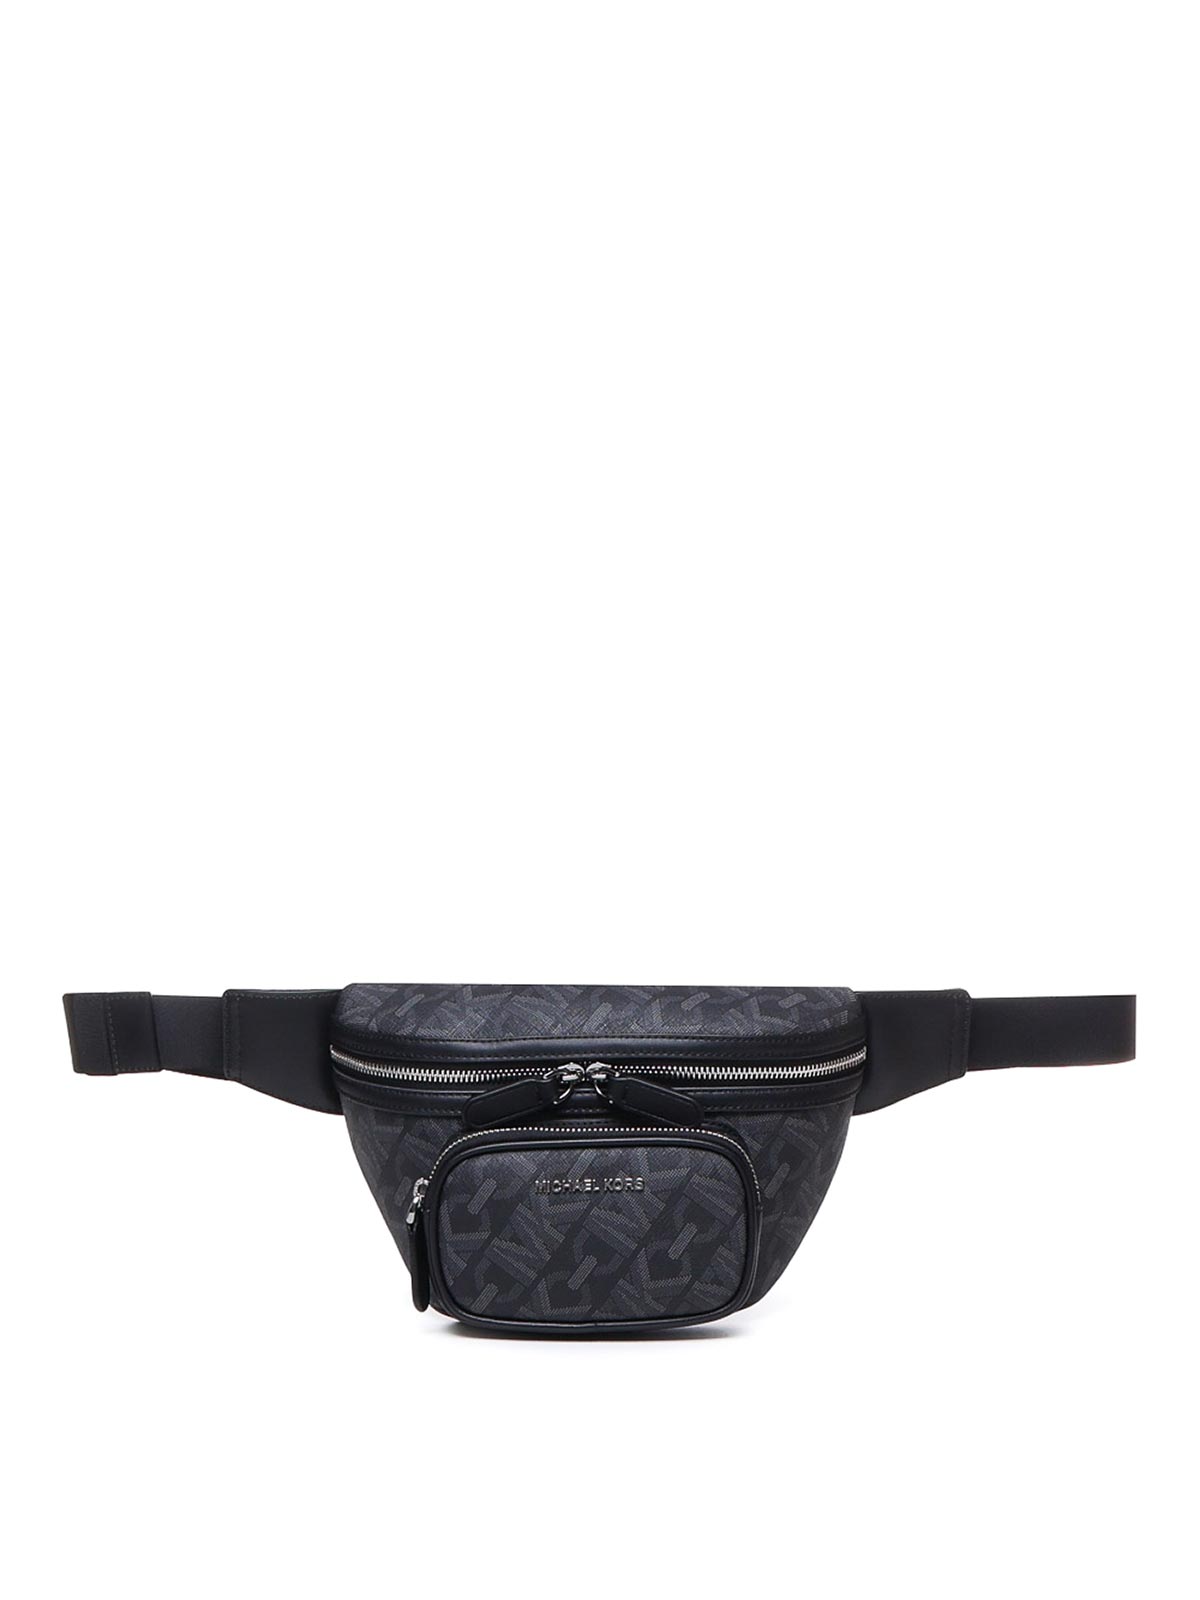 Michael Kors Belt Bag: How to easily make a DIY handbag out of a Michael  Kors belt bag - YouTube